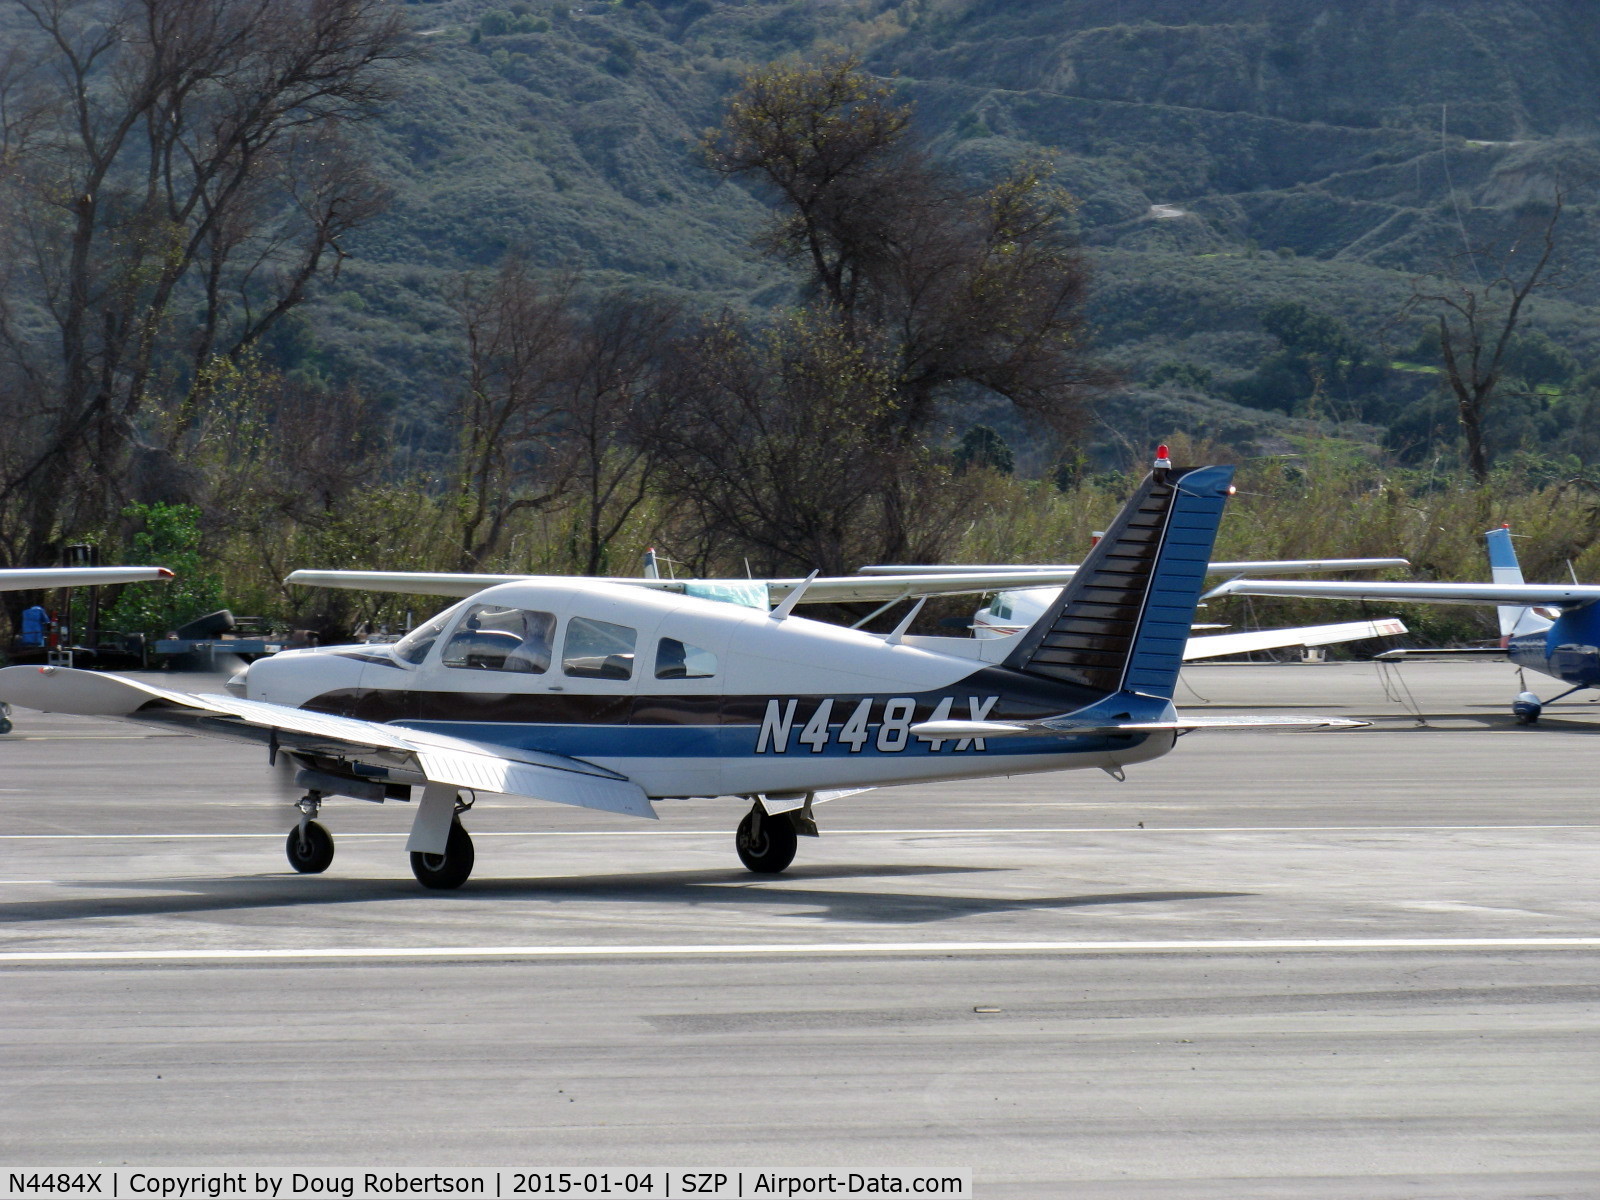 N4484X, 1975 Piper PA-28R-200 Cherokee Arrow II C/N 28R-7635056, 1975 Piper PA-28R-200B ARROW II, Lycoming IO-360-C1C 200 Hp, taxi